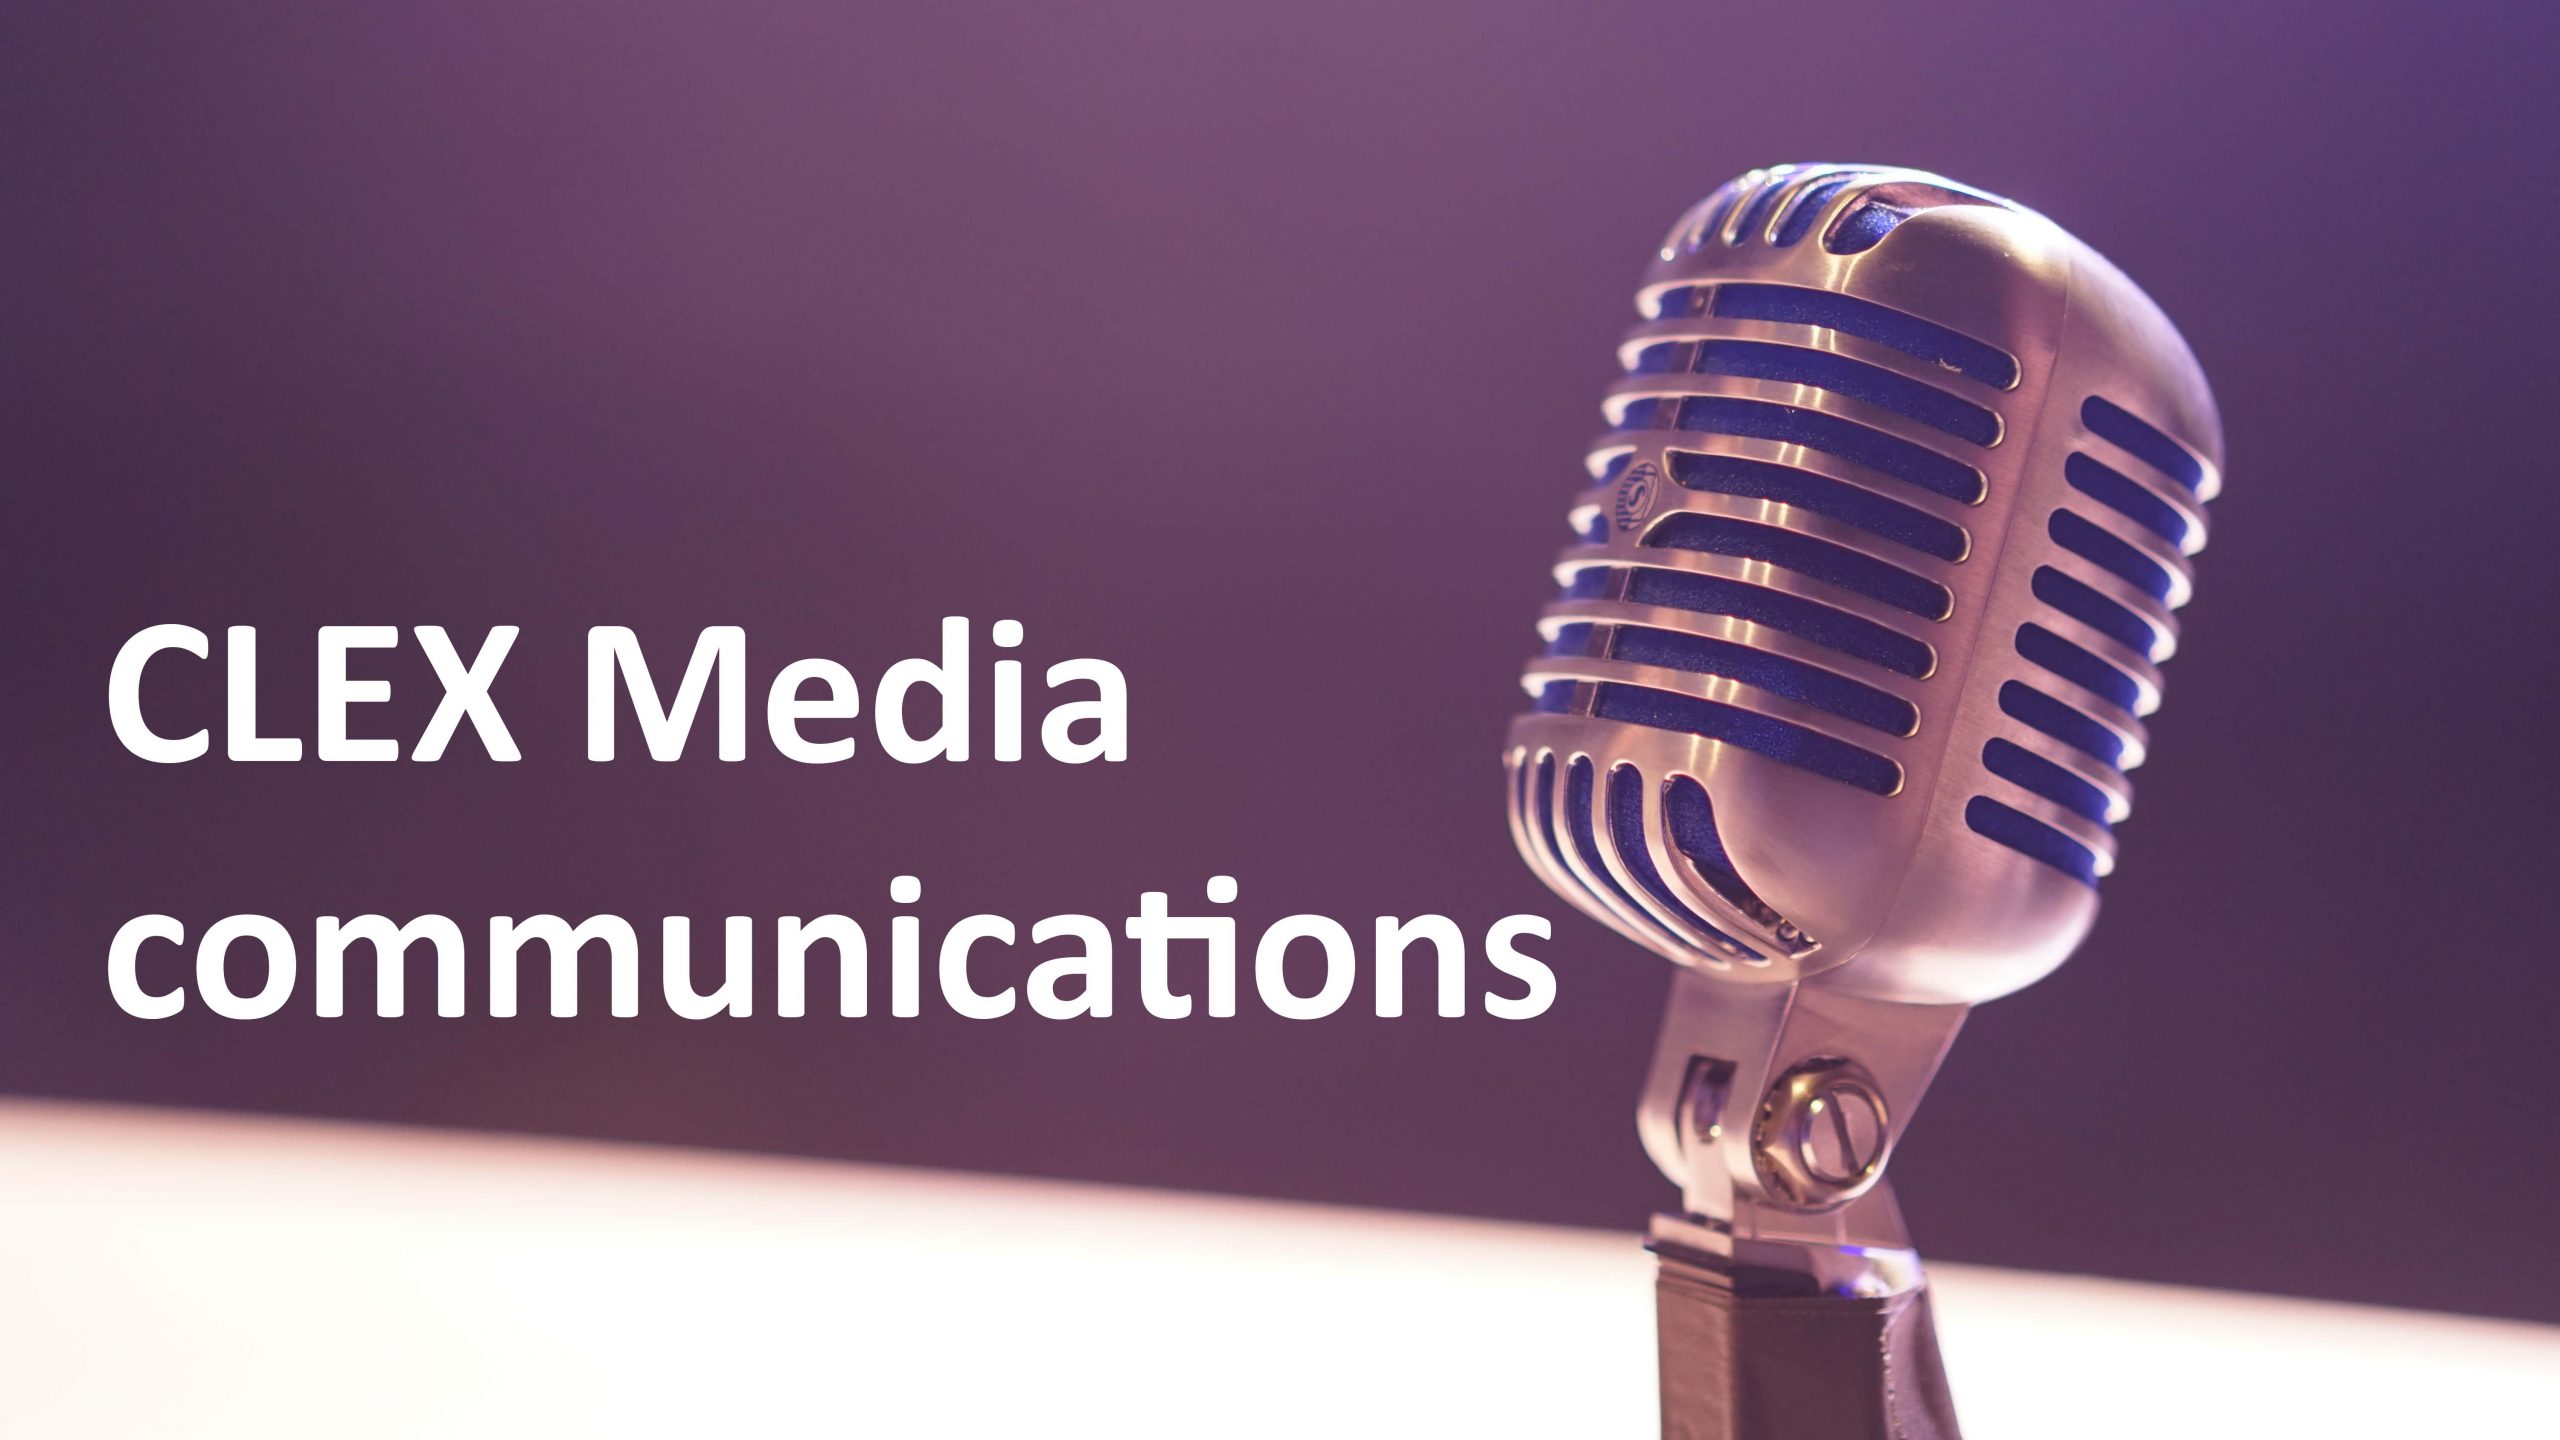 Media & communications report – April 2021